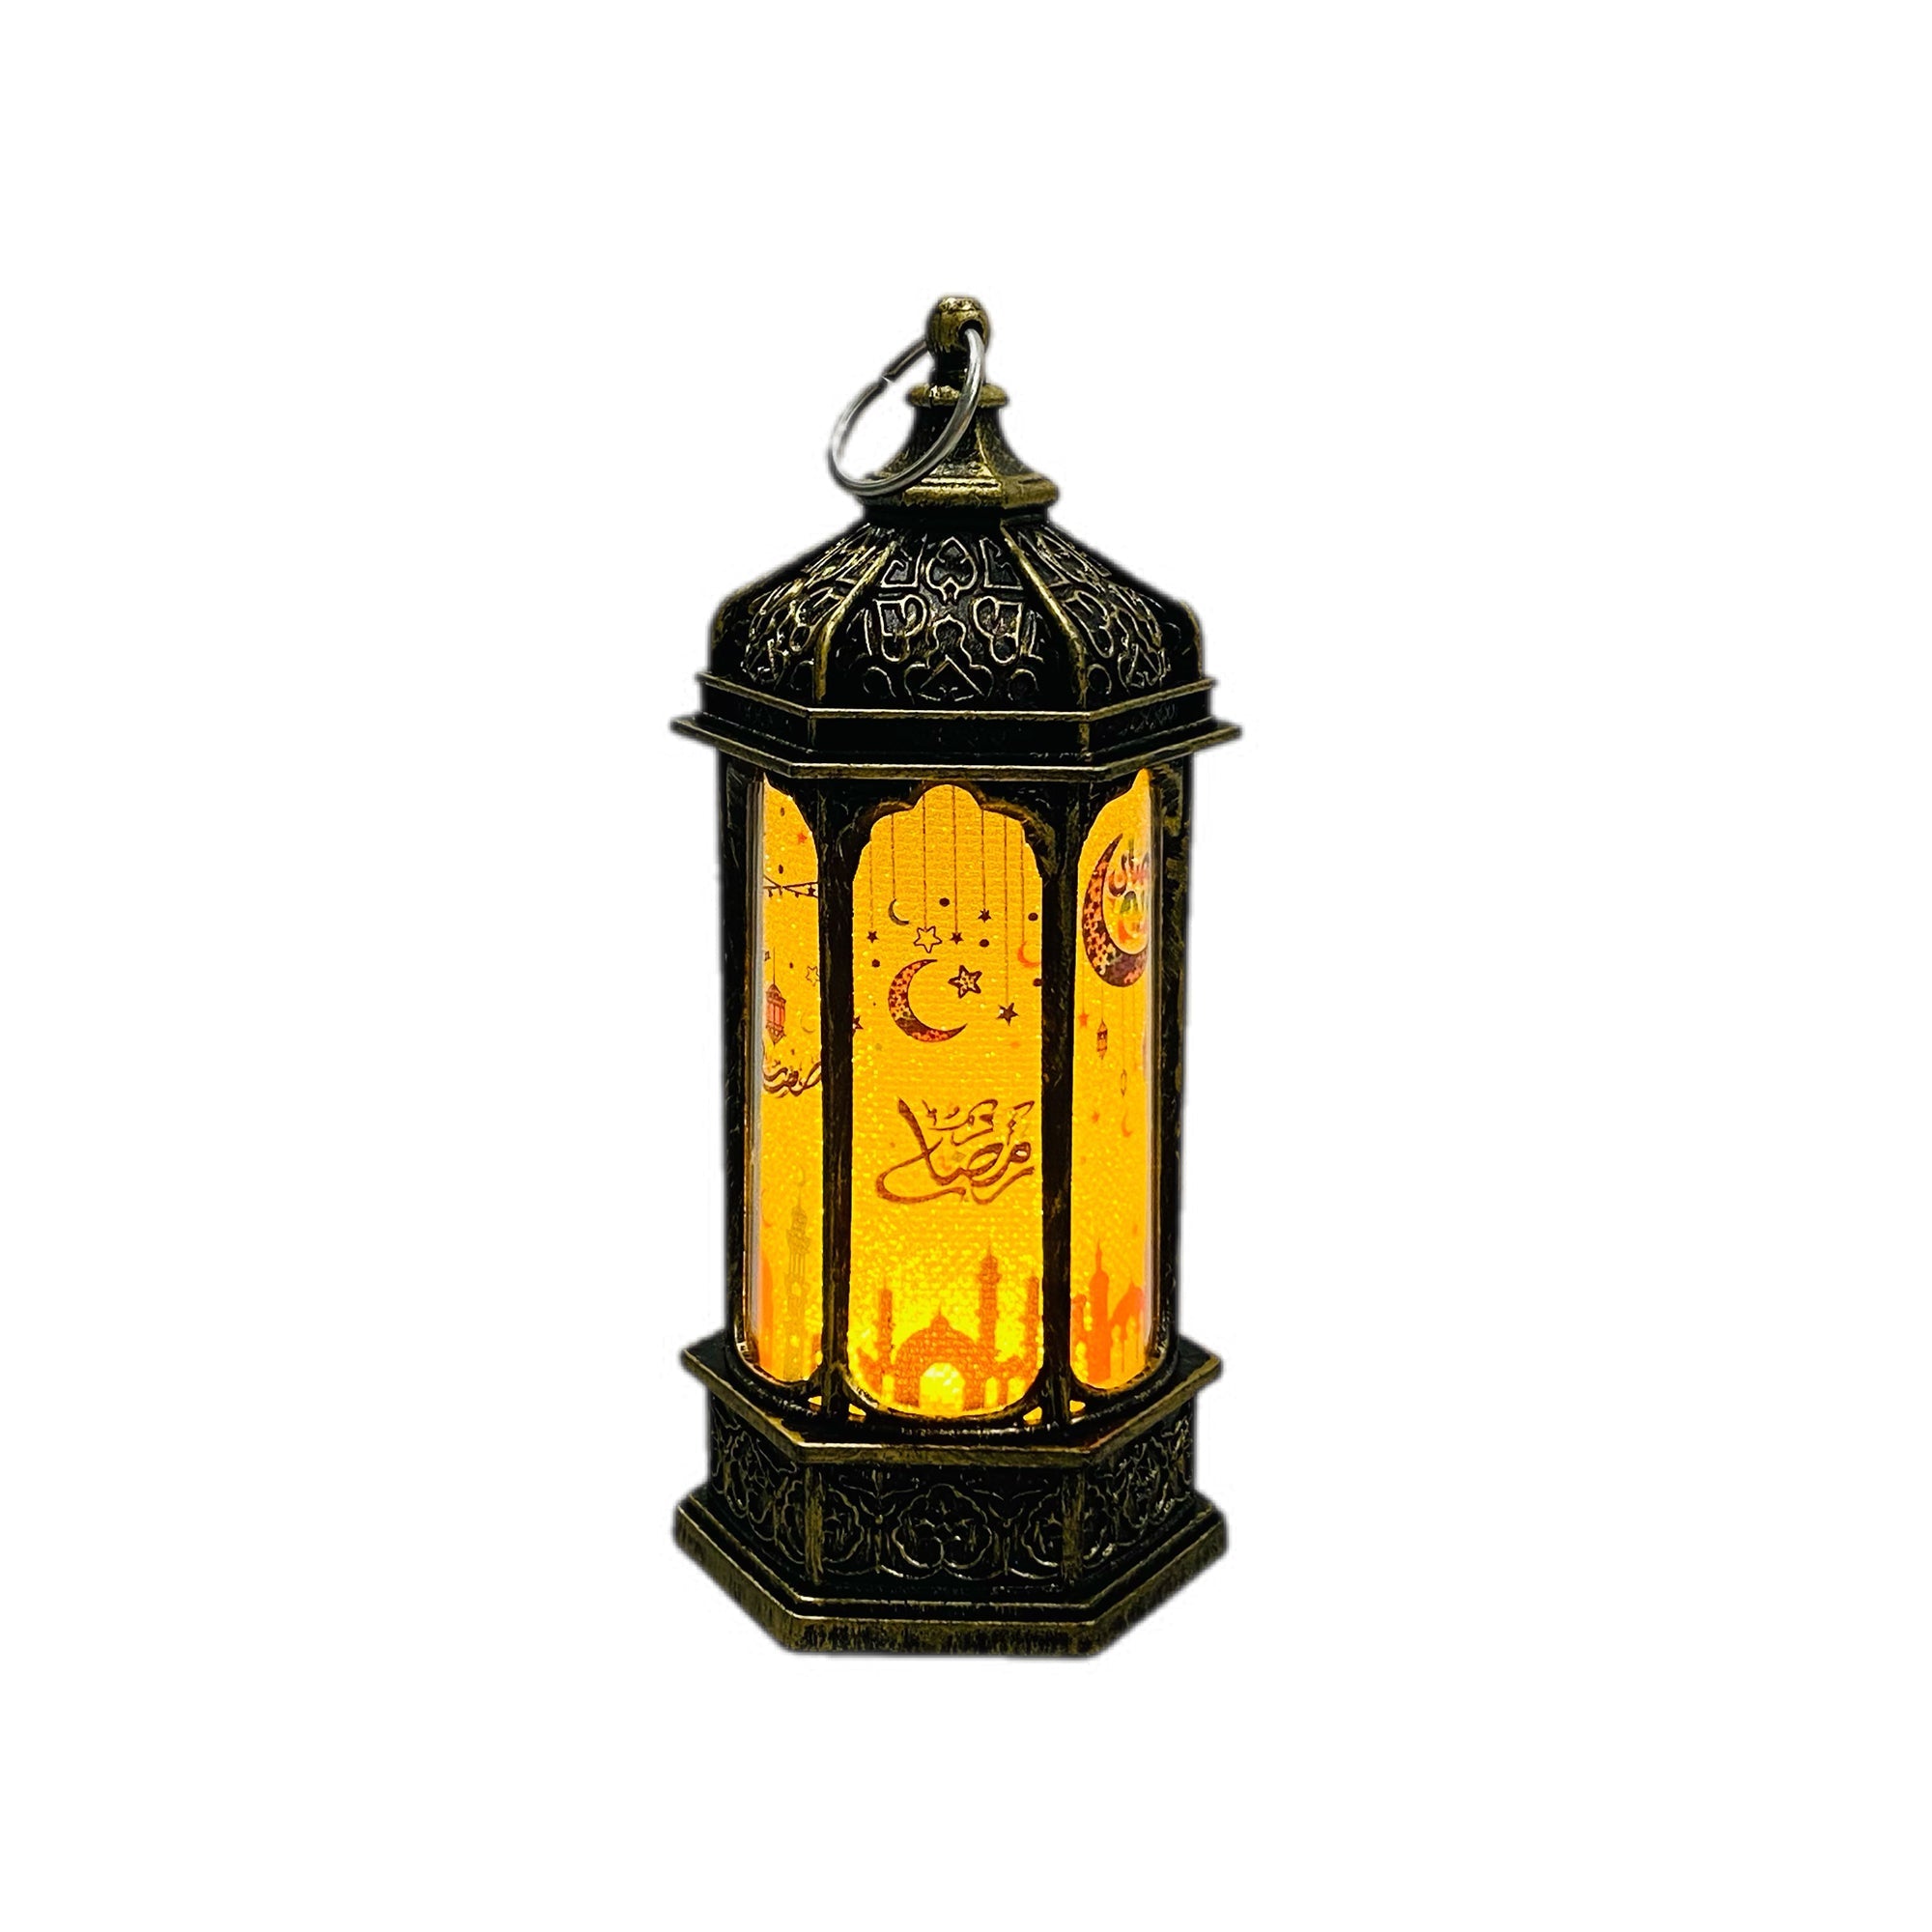 Ramadan Mini Lantern Light -Rmd77- فانوس صغير ضوئي رمضان Gold